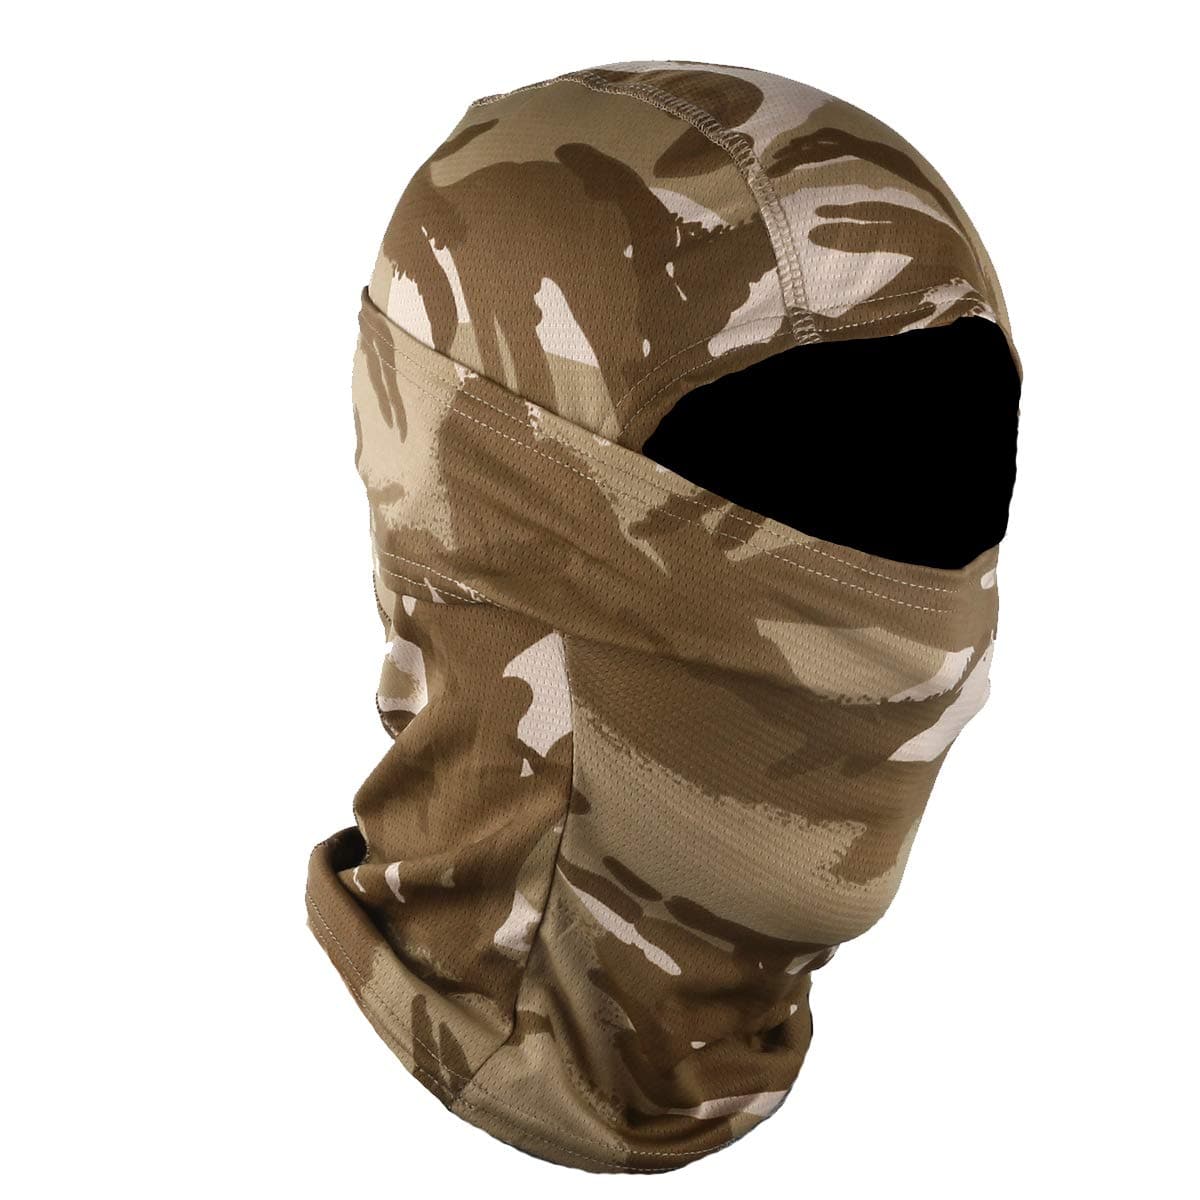 Breathable Tactical Ride Balaclava UV Protection Face Mask